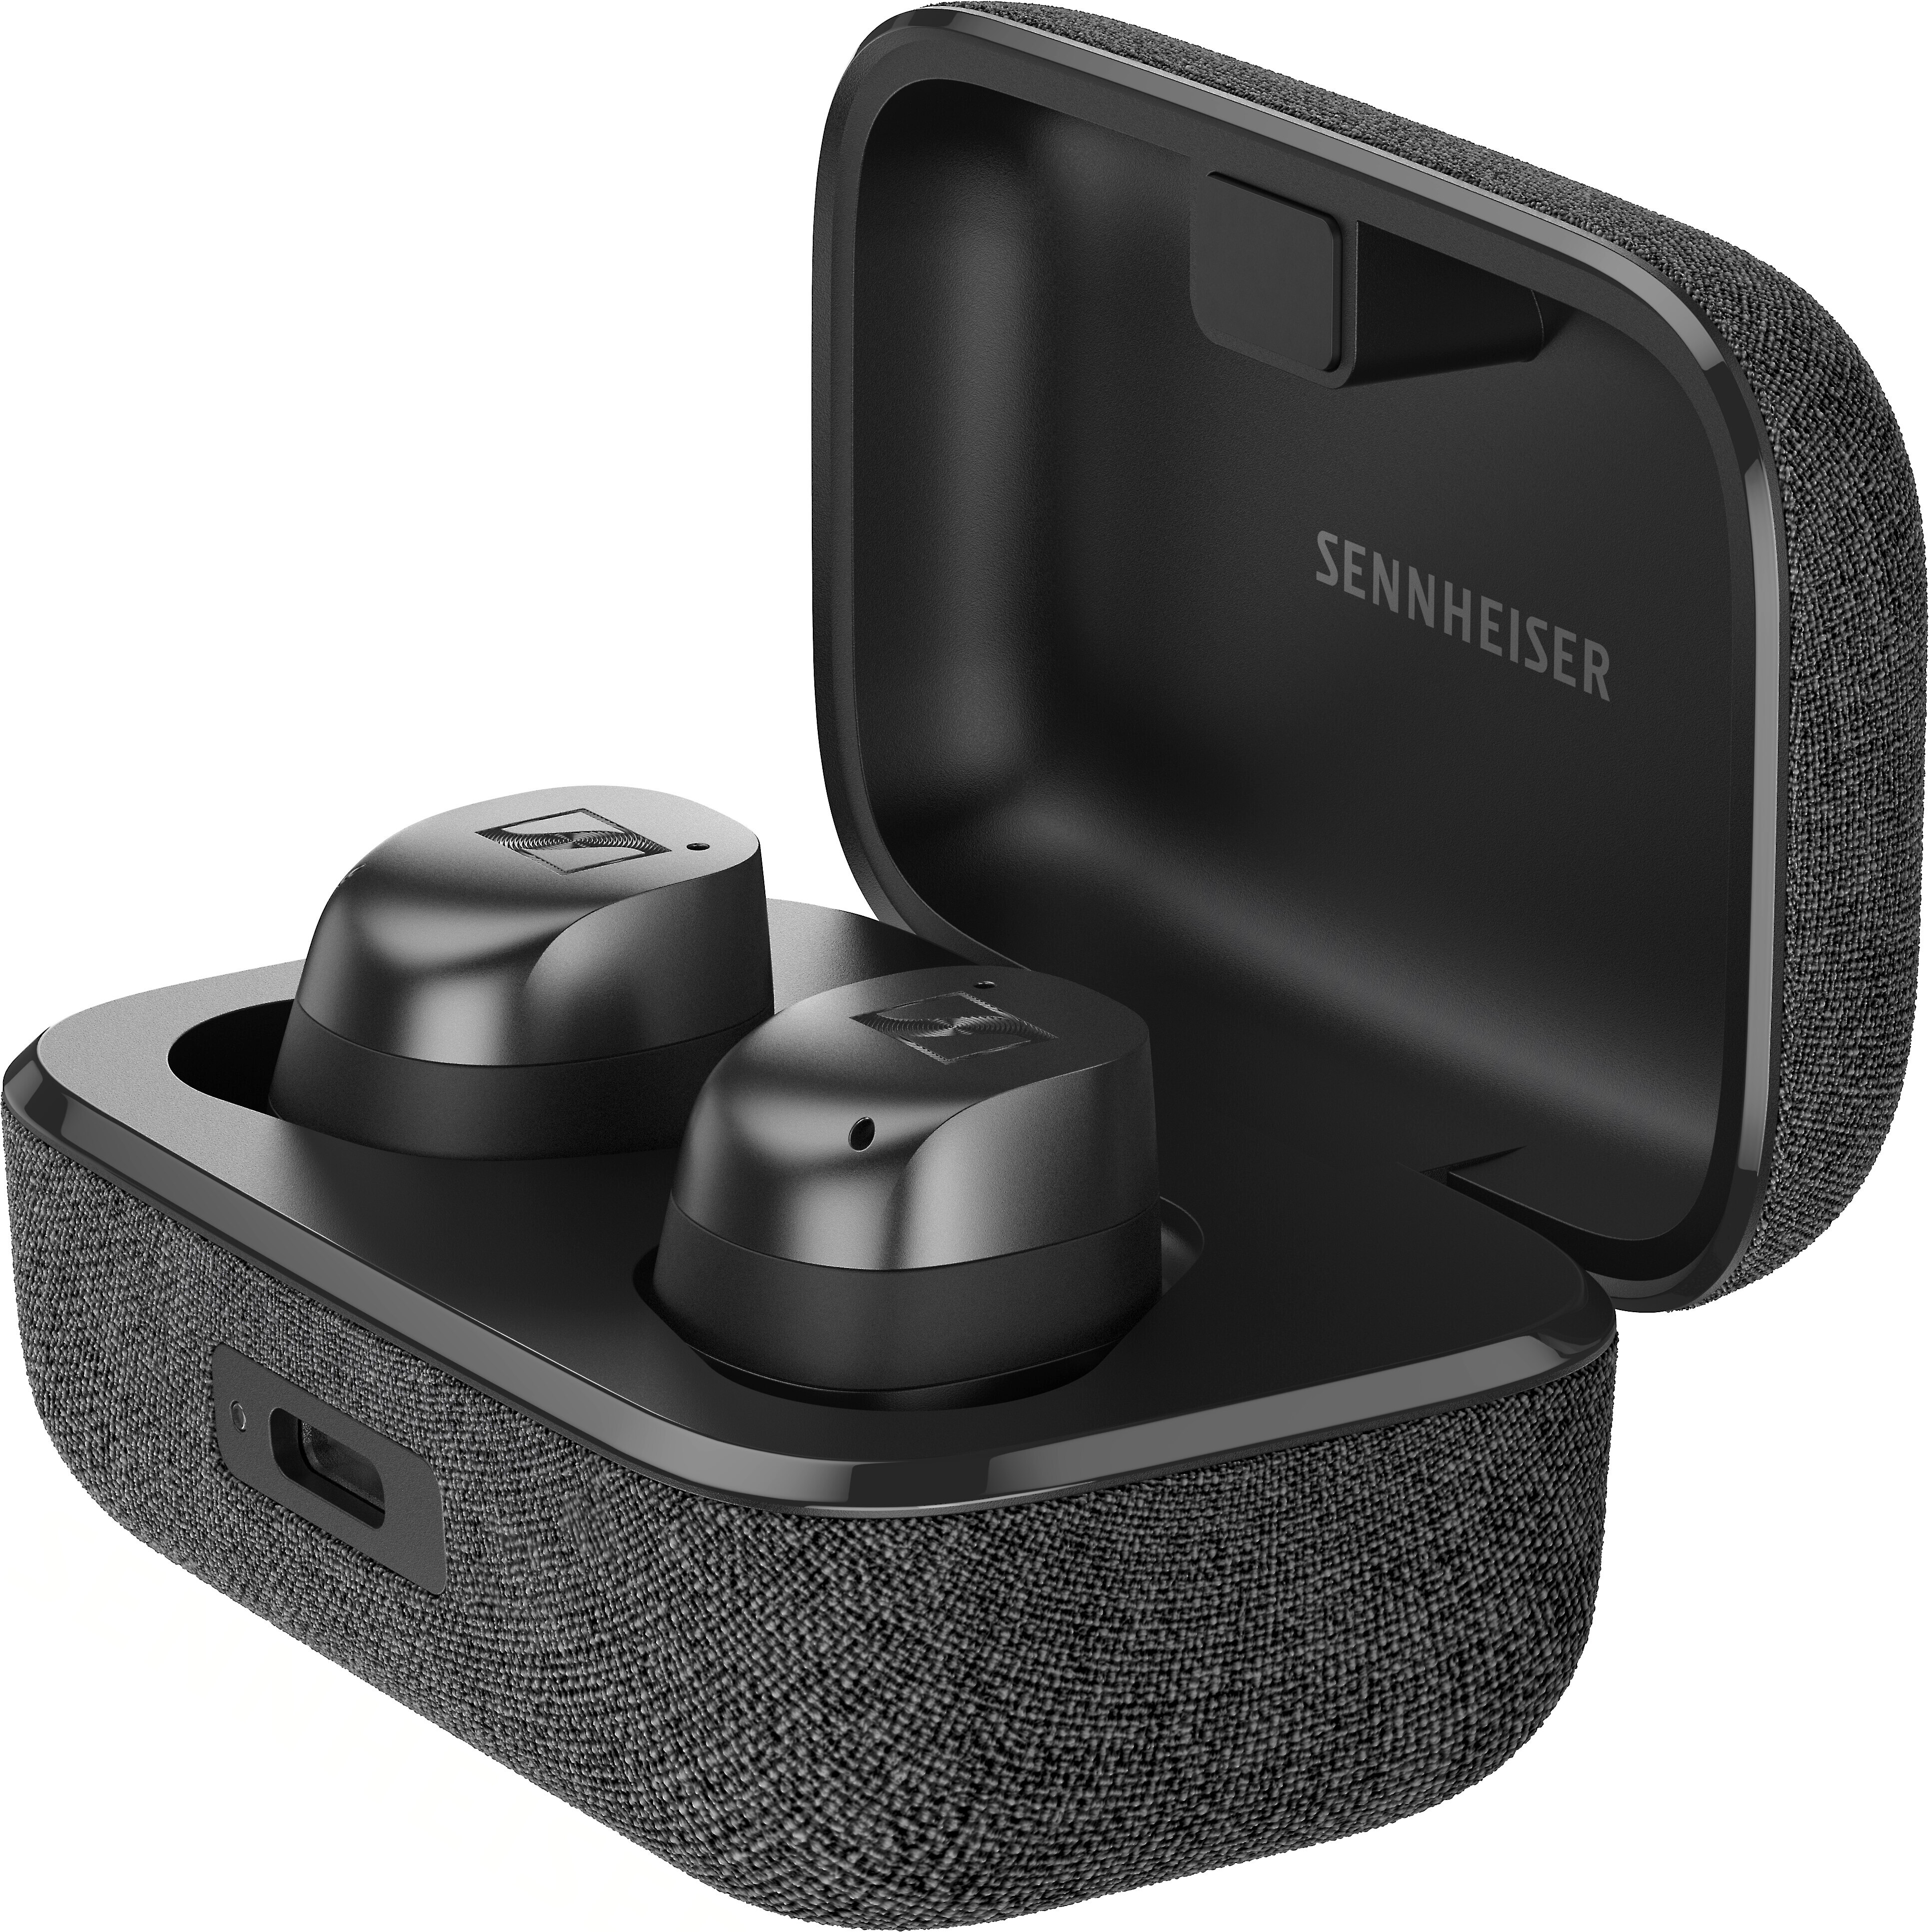 Customer Reviews: Sennheiser Momentum True Wireless 3 